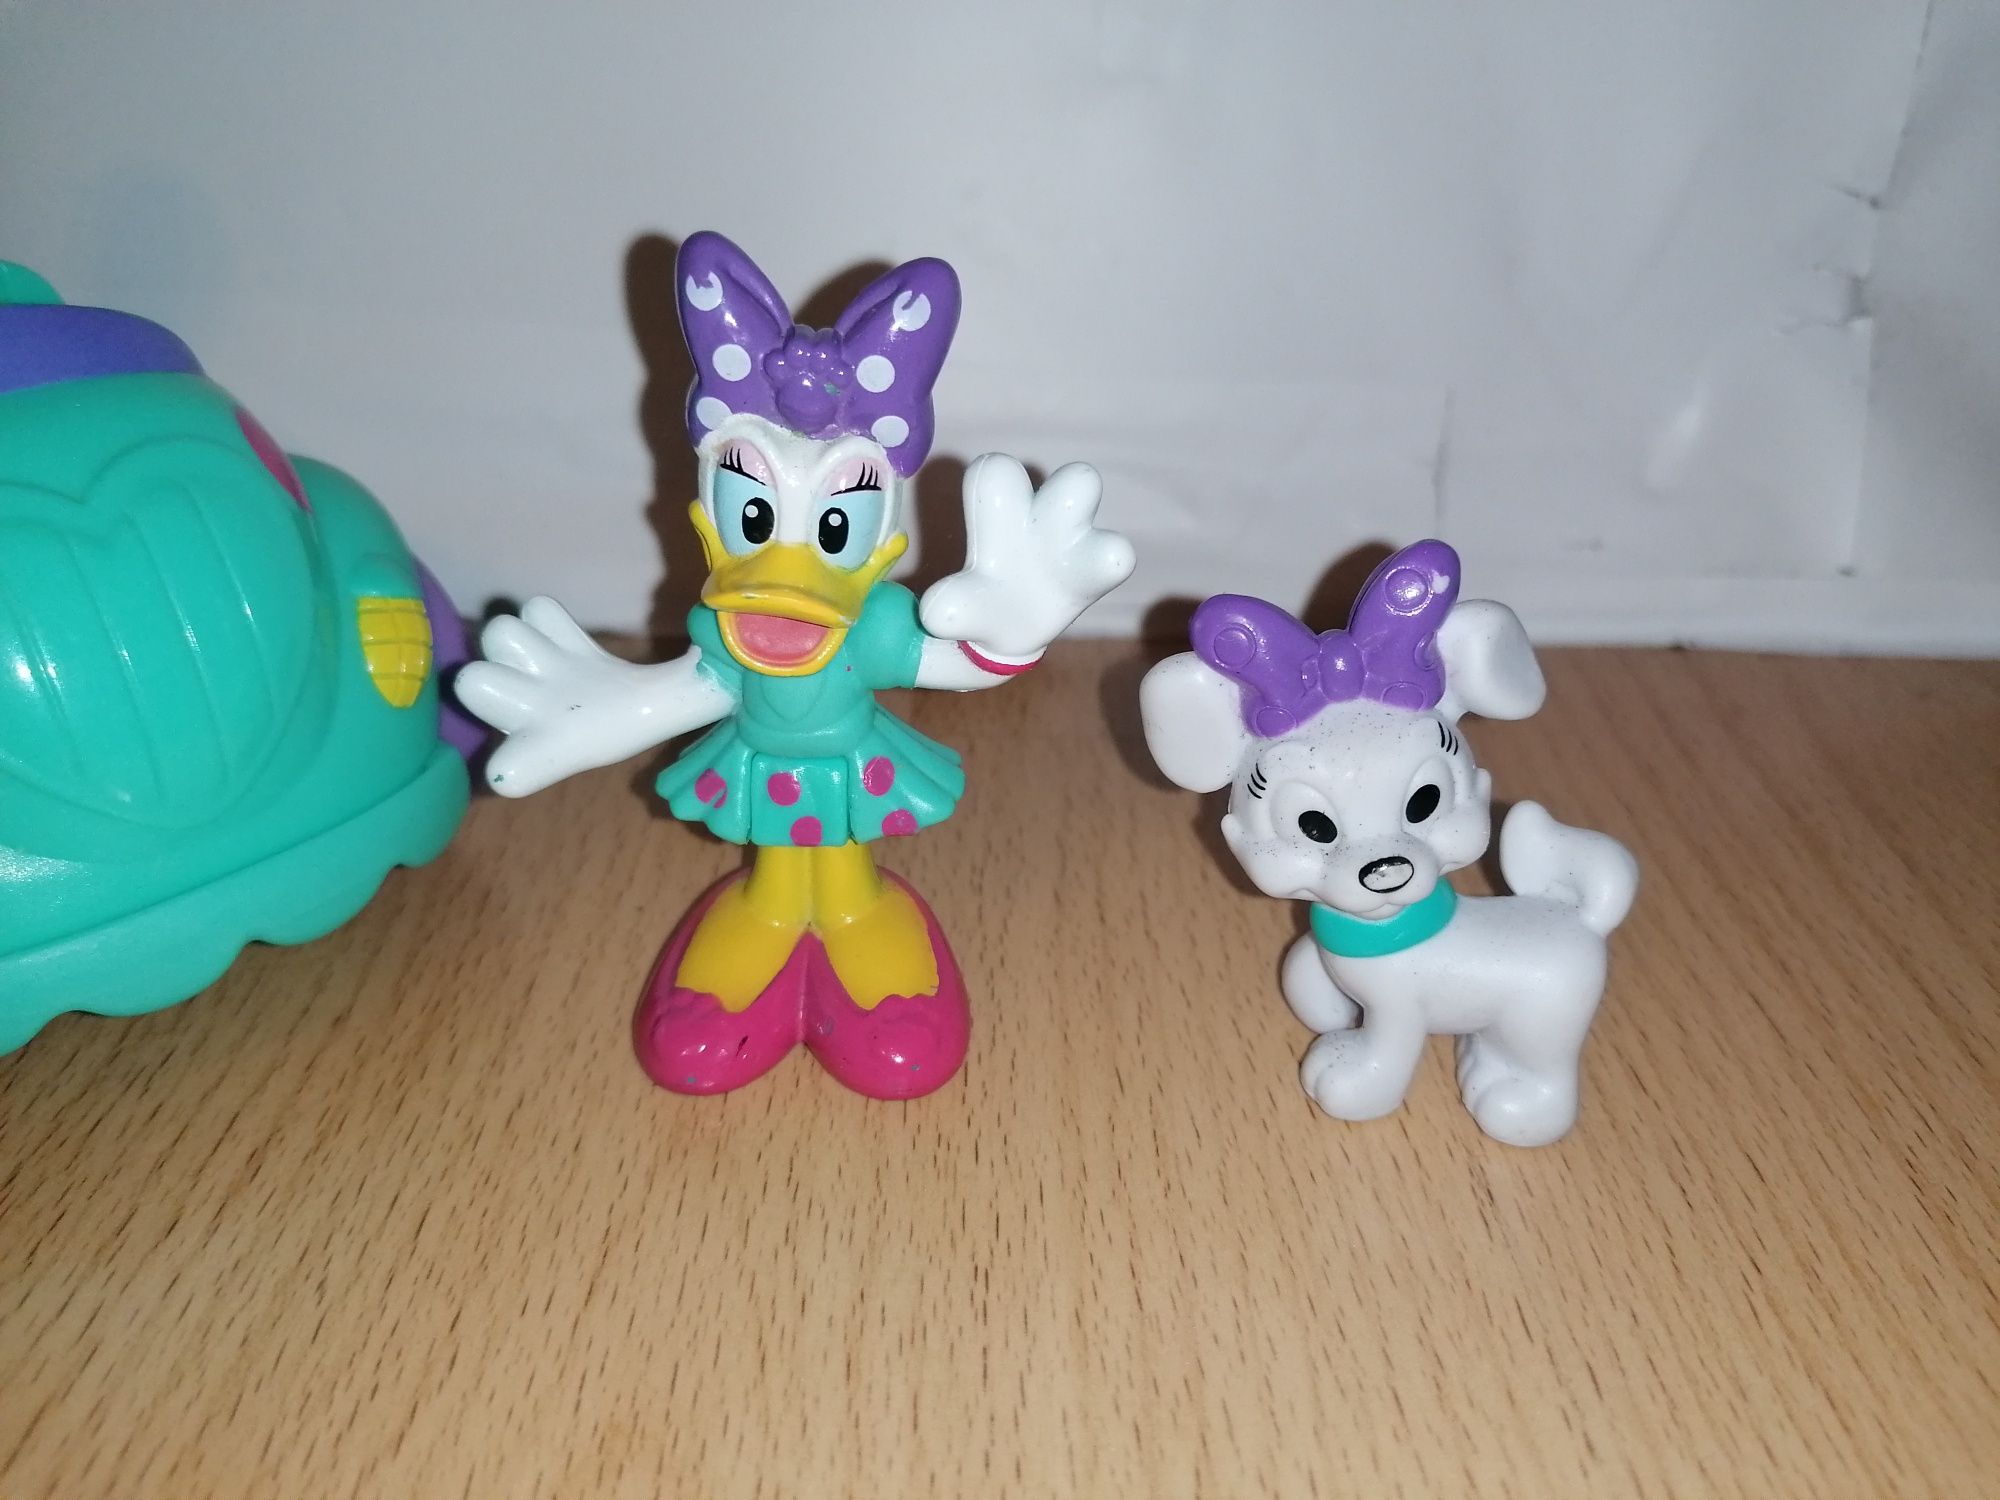 Daisy și Donald din gașca lui mickey mouse și  minnie